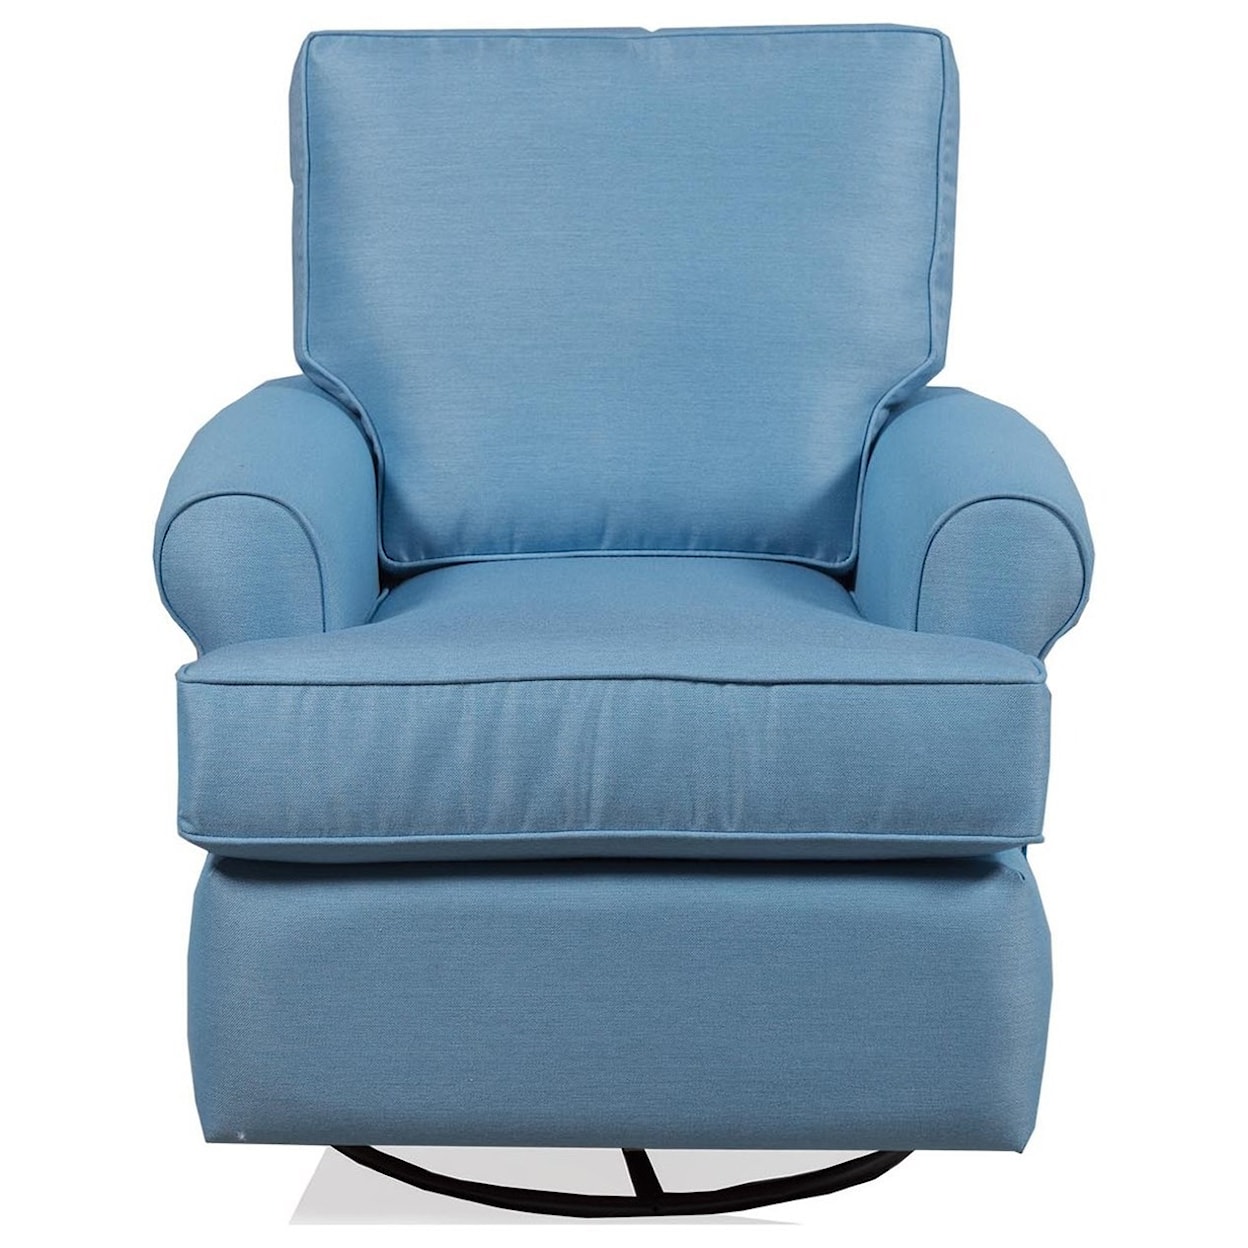 Capris Furniture SG121 Swivel Glider Chair